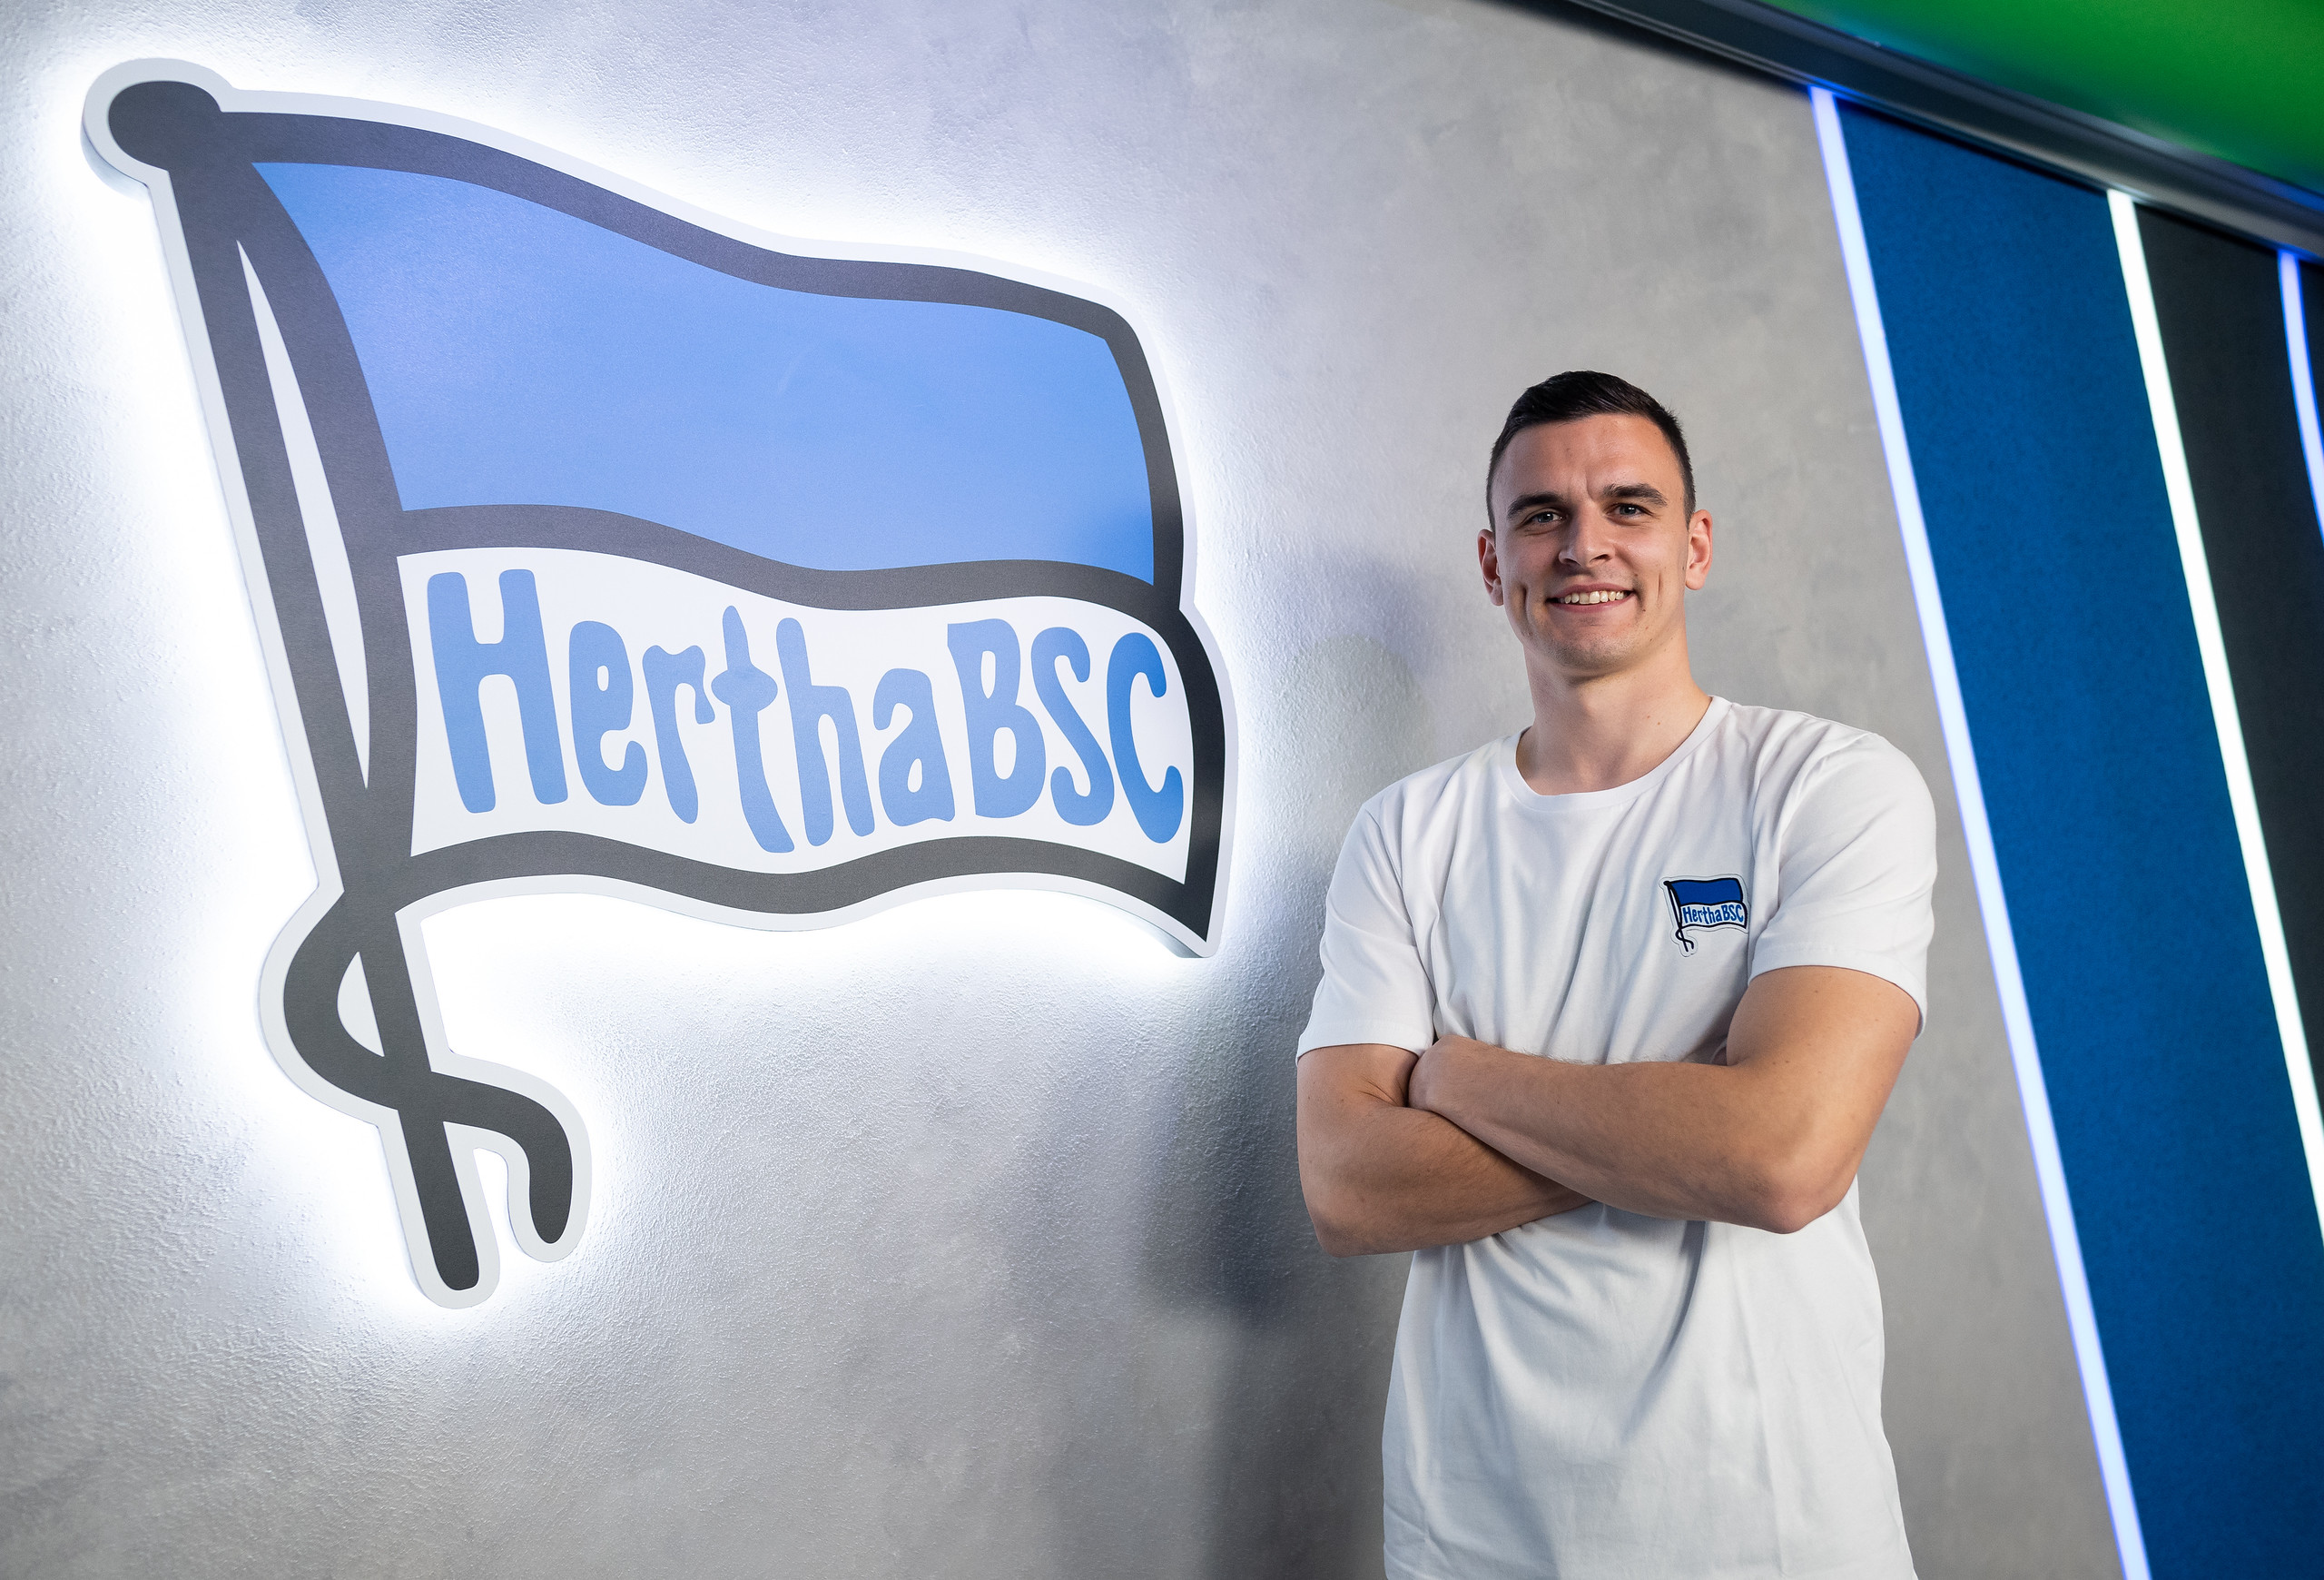 Filip Uremović poses in front of the Hertha badge.